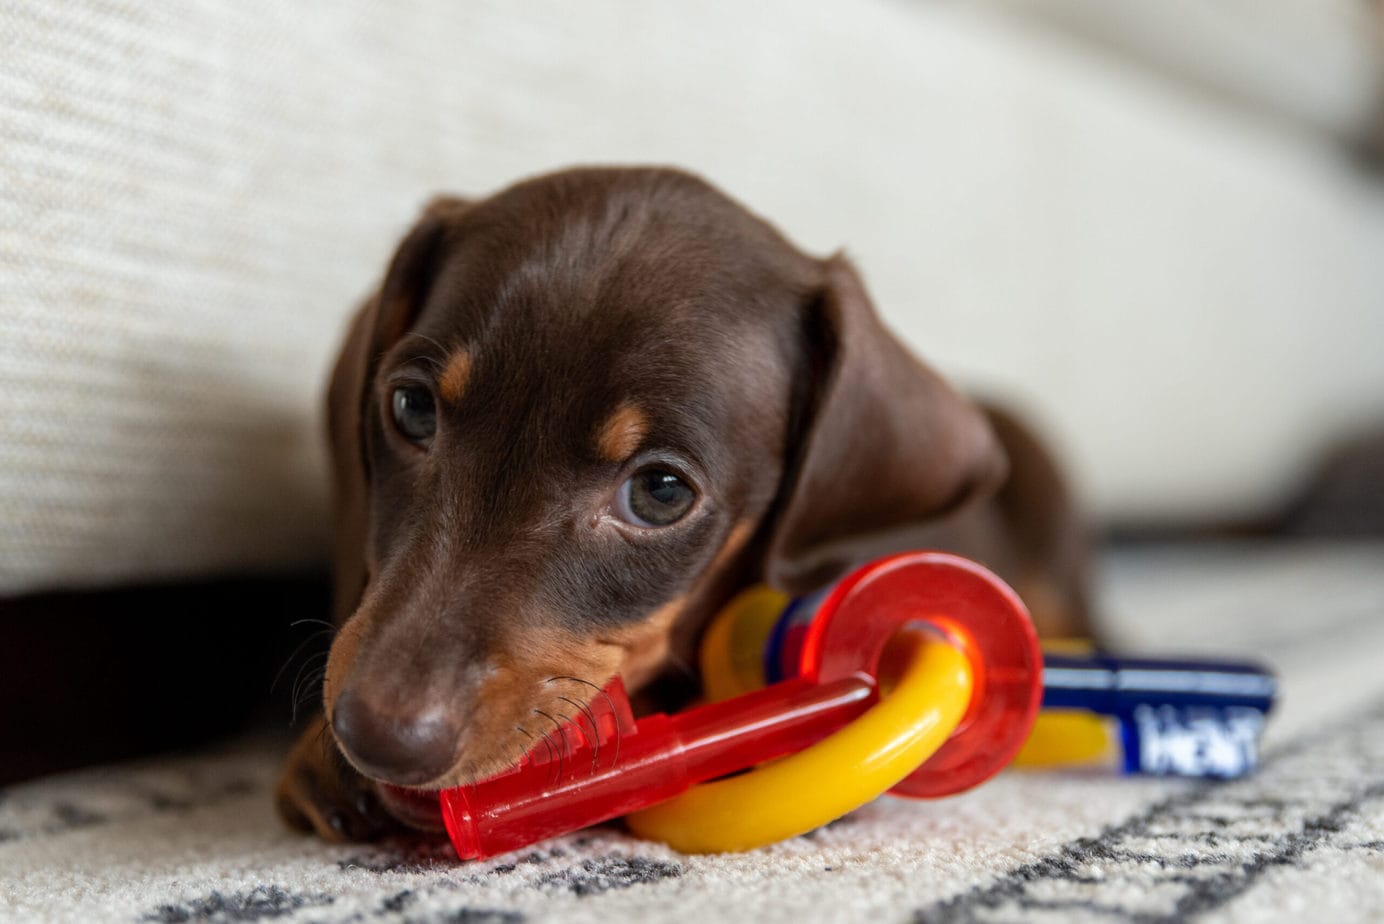 dachshund puppy with keys to chew on